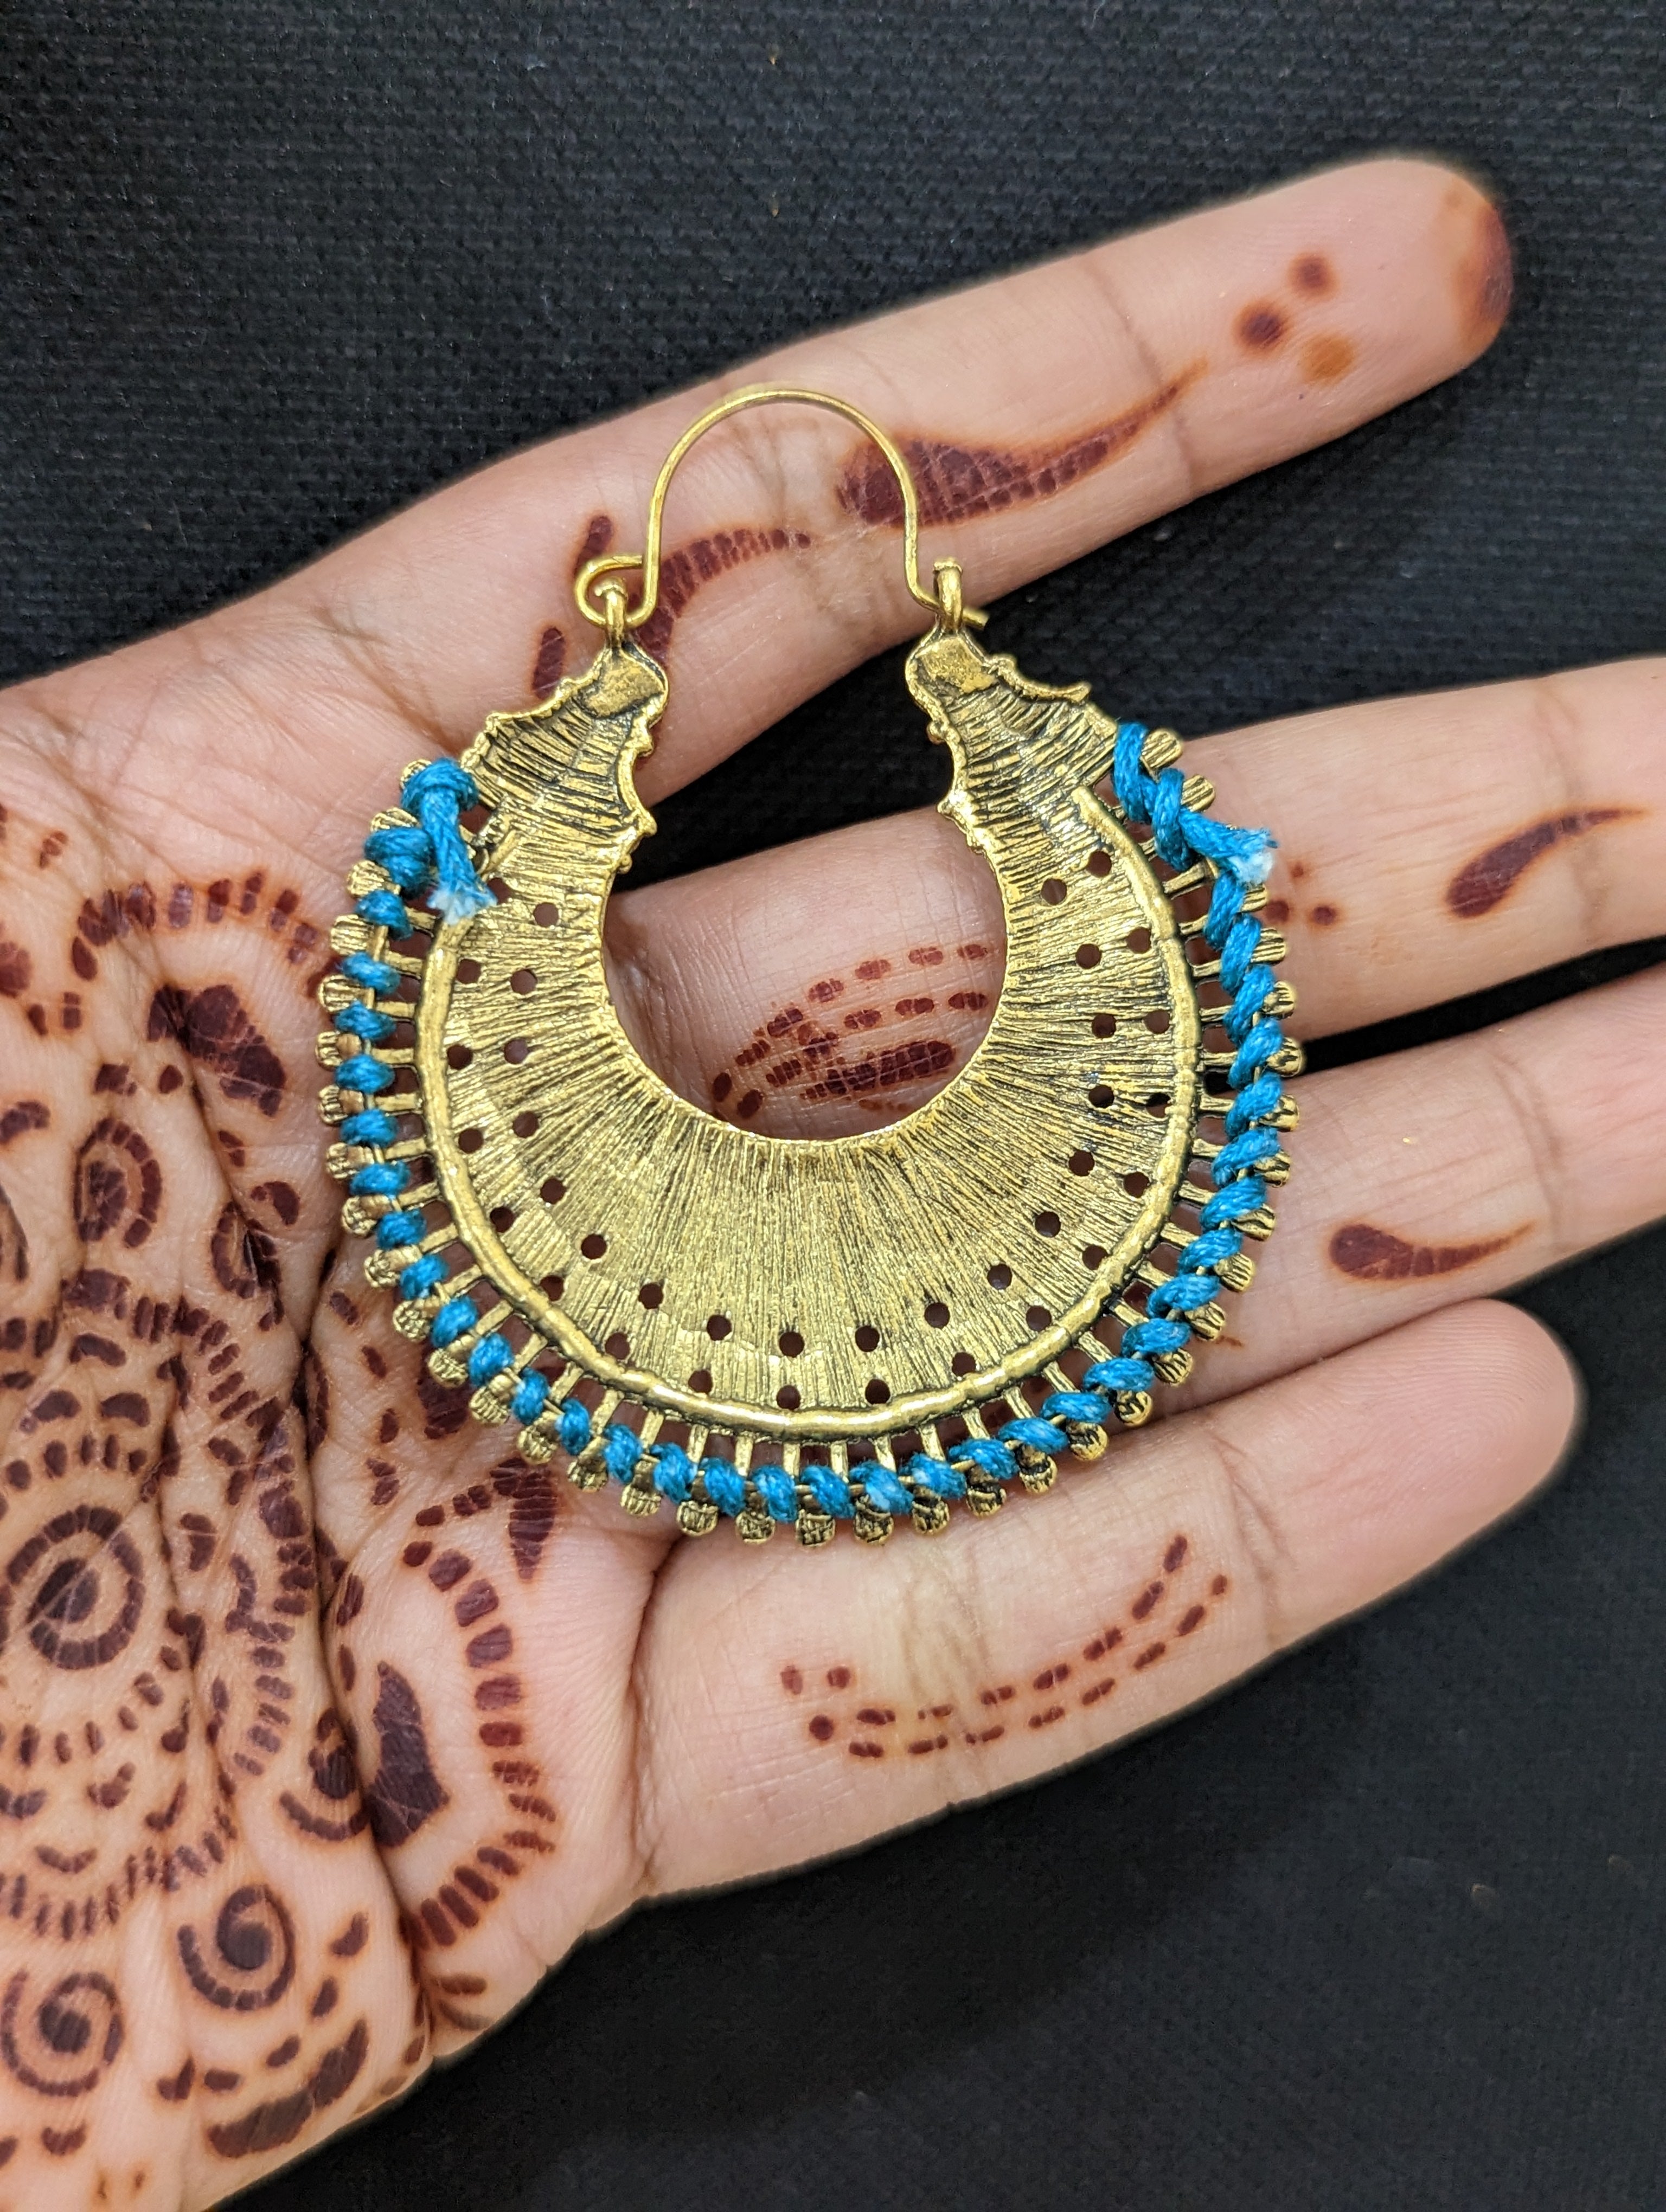 18K Gold Traditional Hoop Earrings with Pearls (SJ_1486) – Shining Jewel